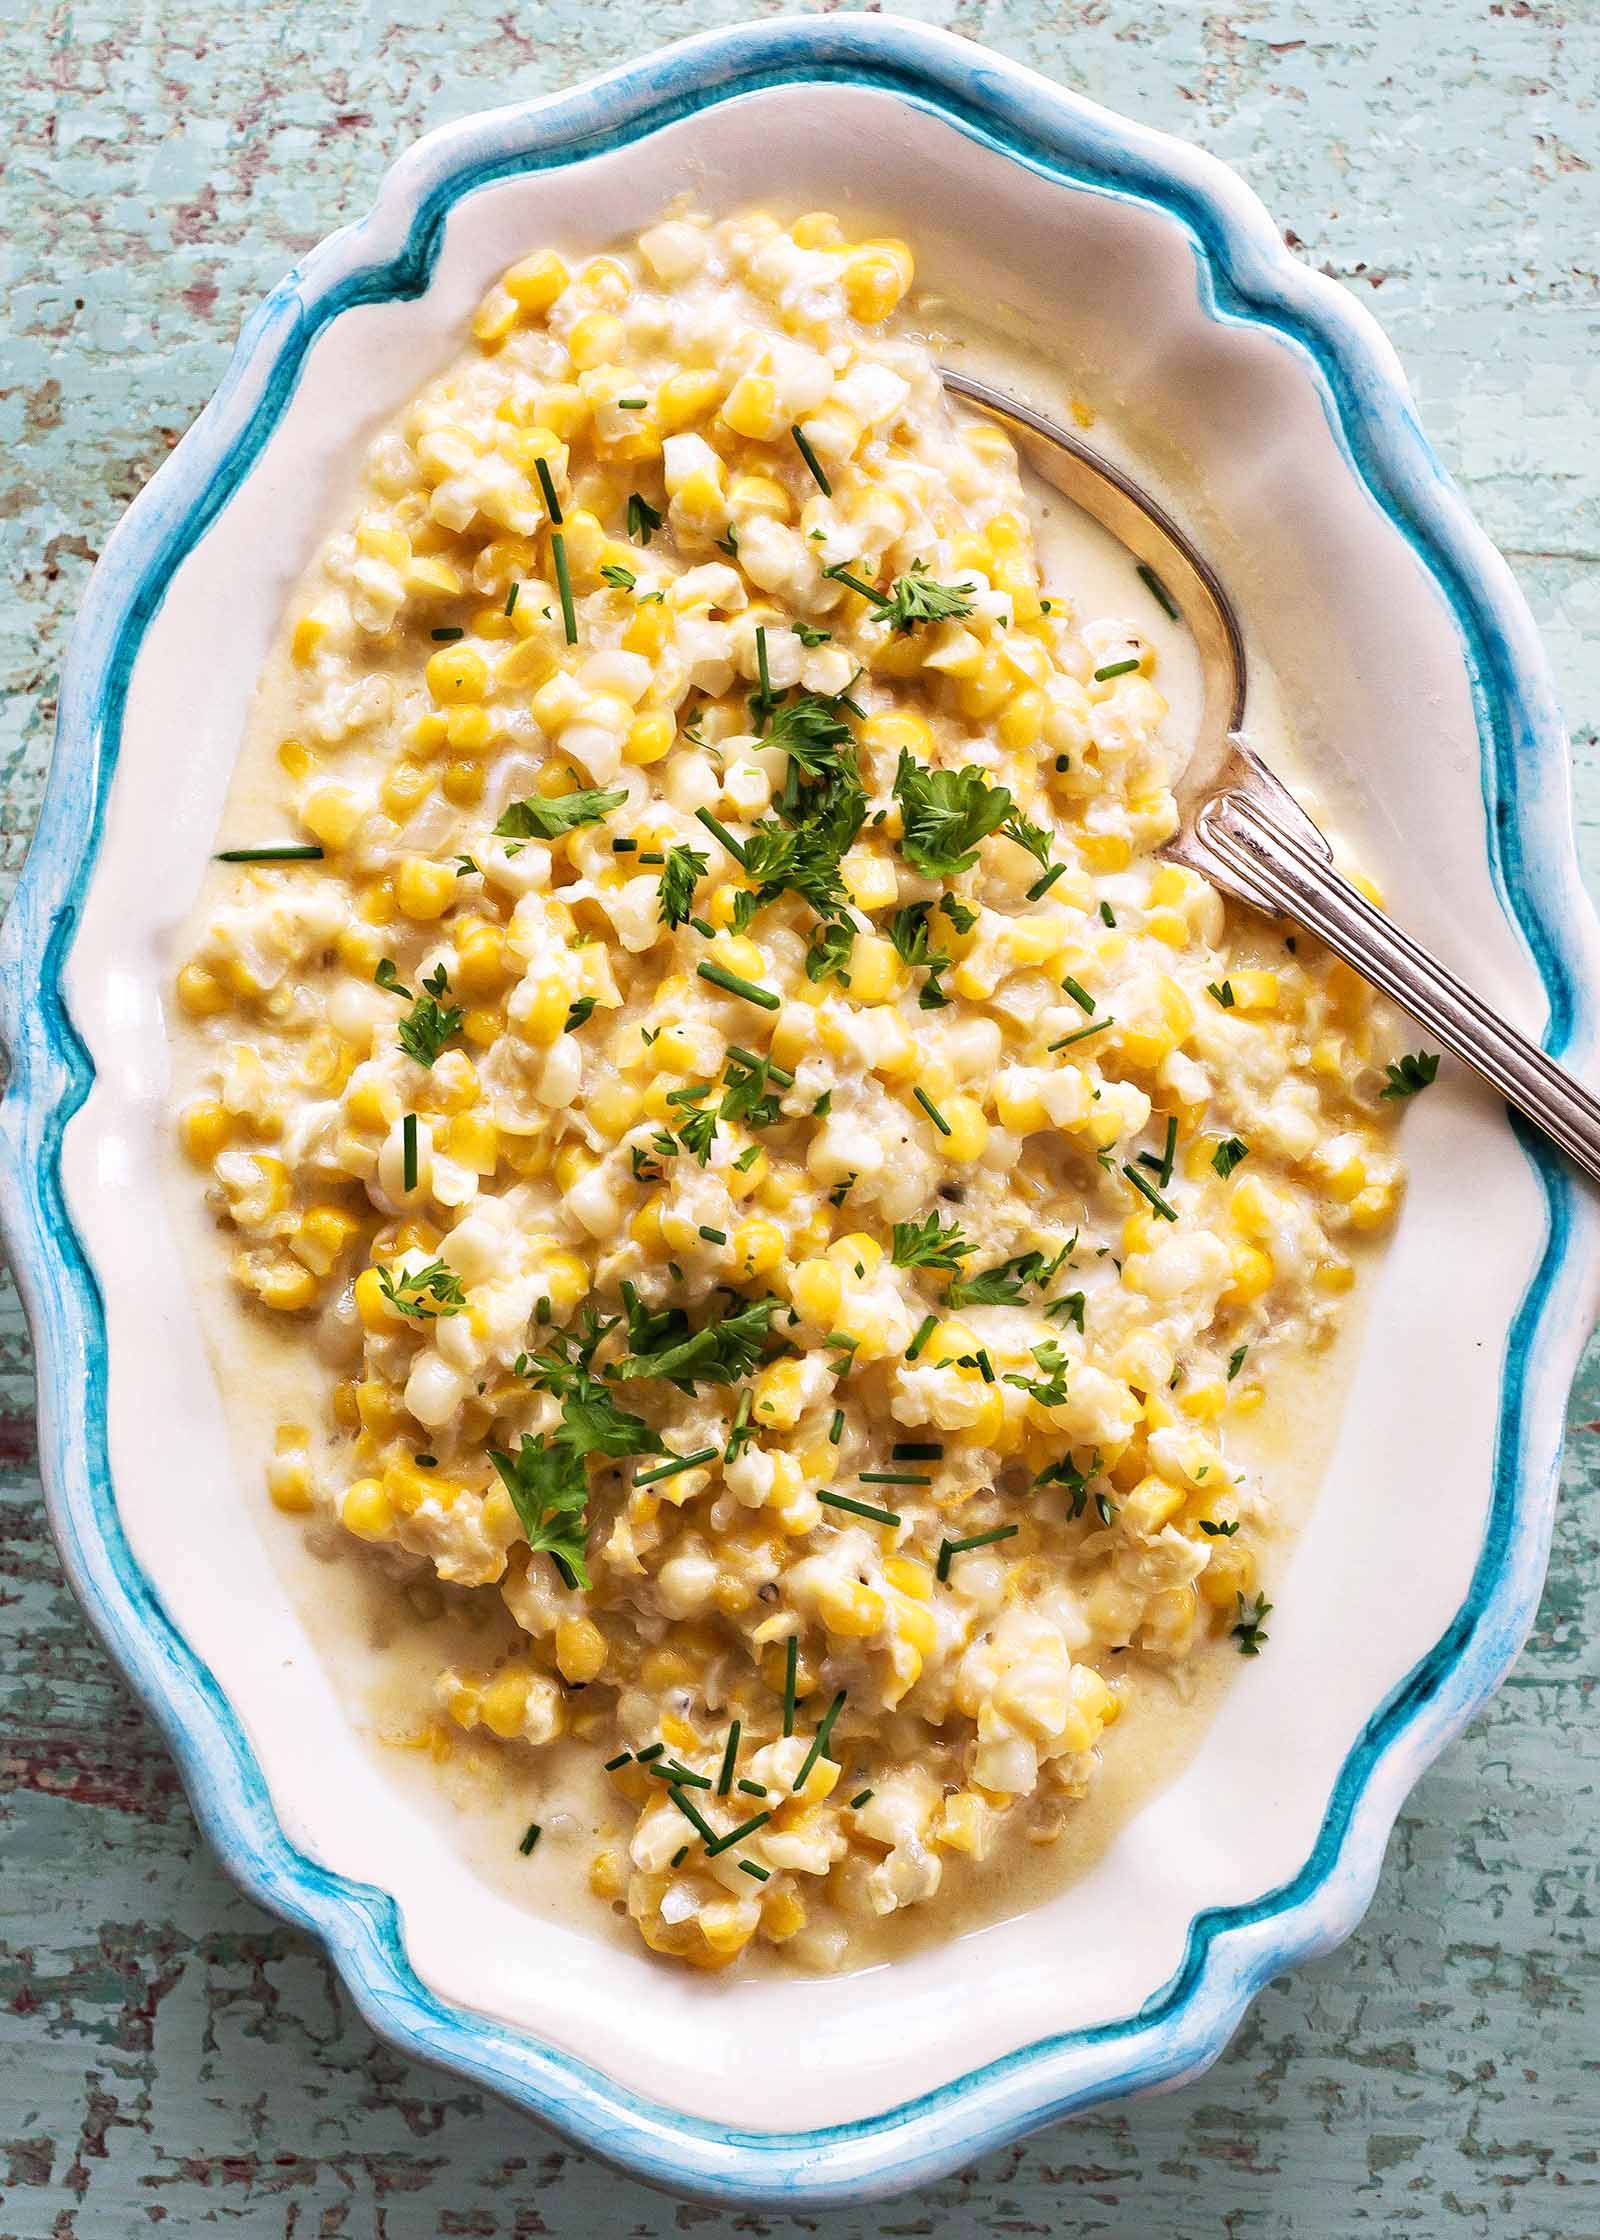 Homemade cream corn served in a serving platter.